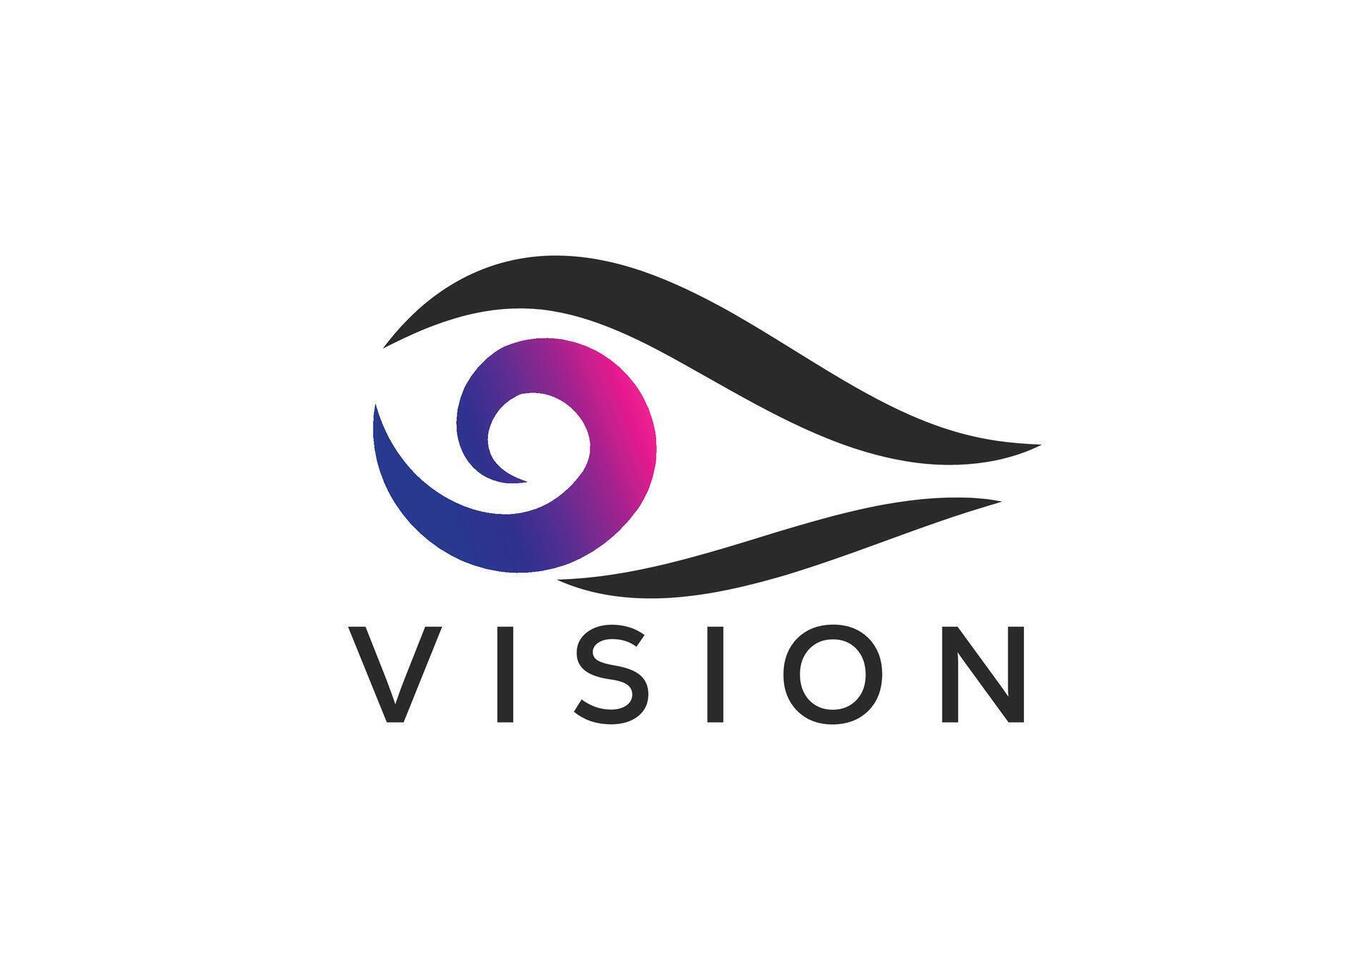 Minimalist vision eye logo design vector template. Modern eye logo. Minimalist style eye logo